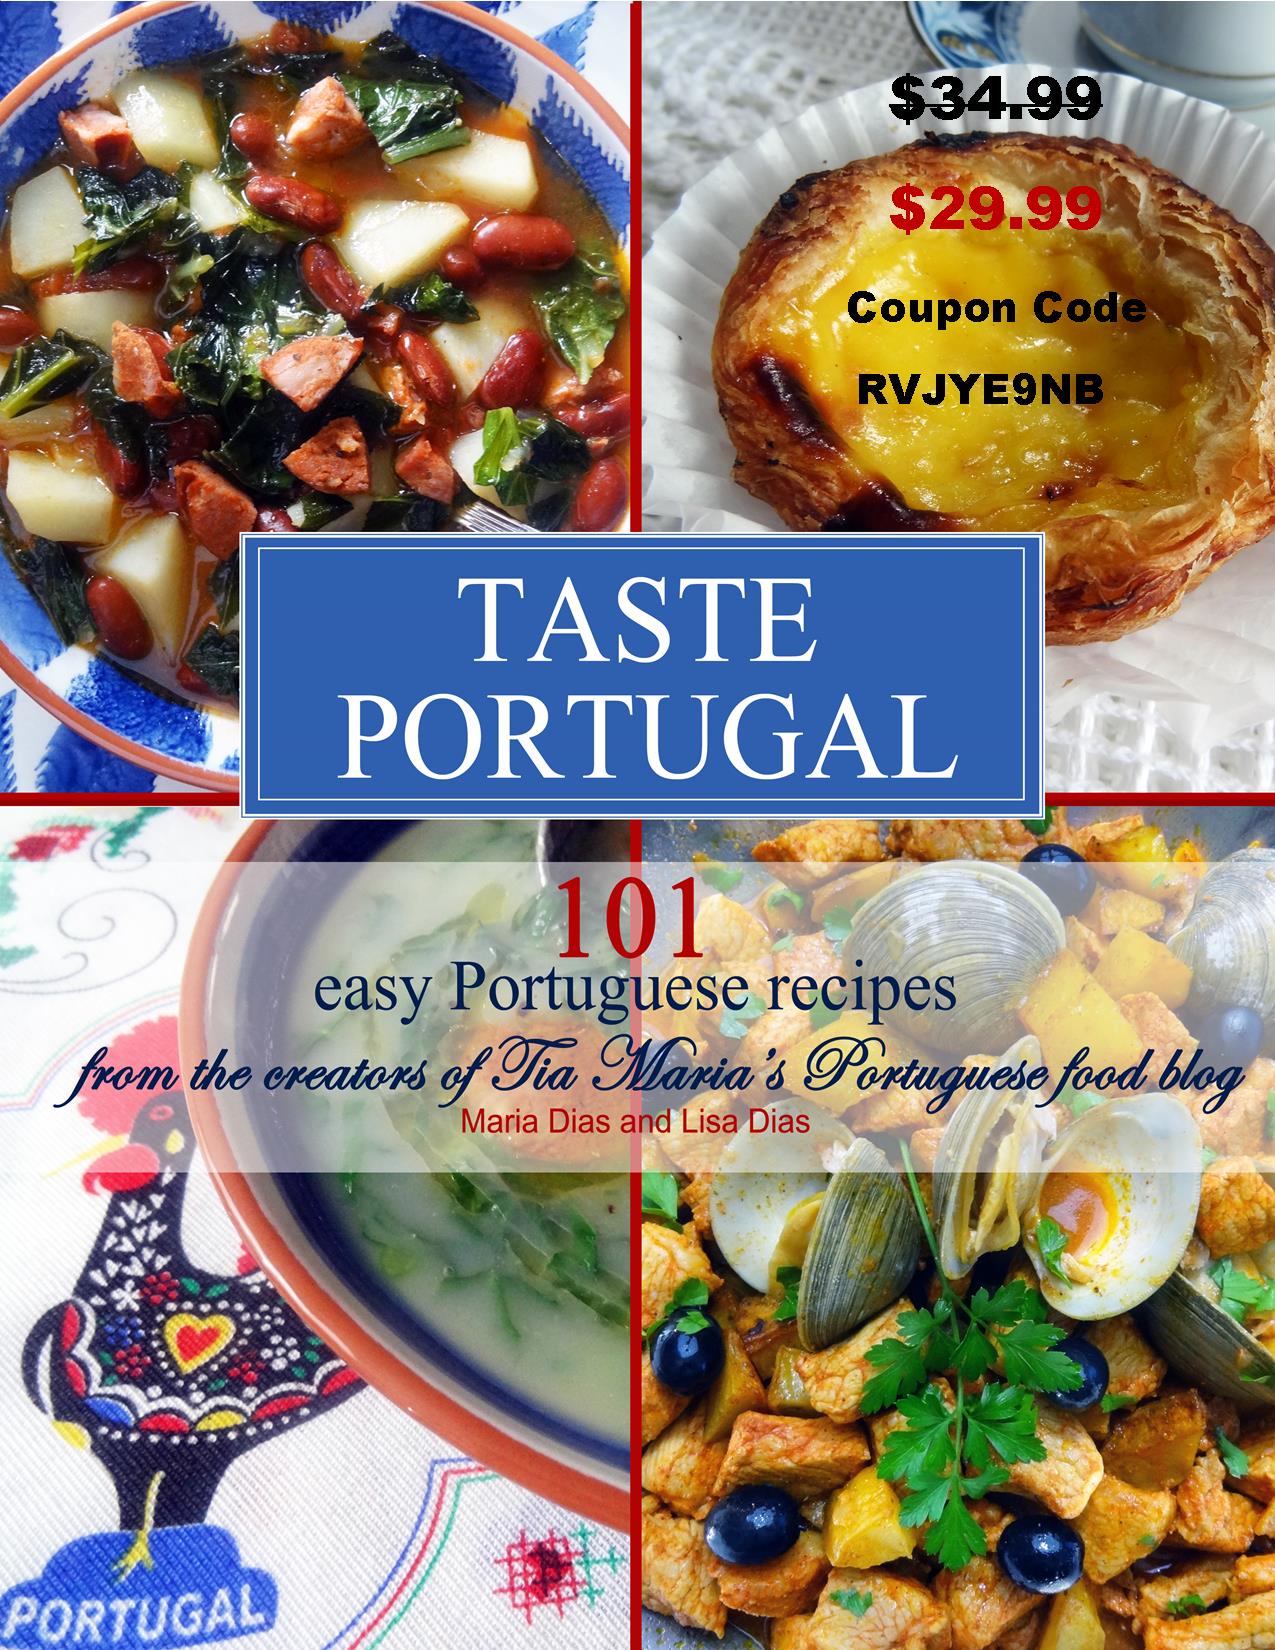 Taste Portugal 101 easy P ortguese recipes cookBook 